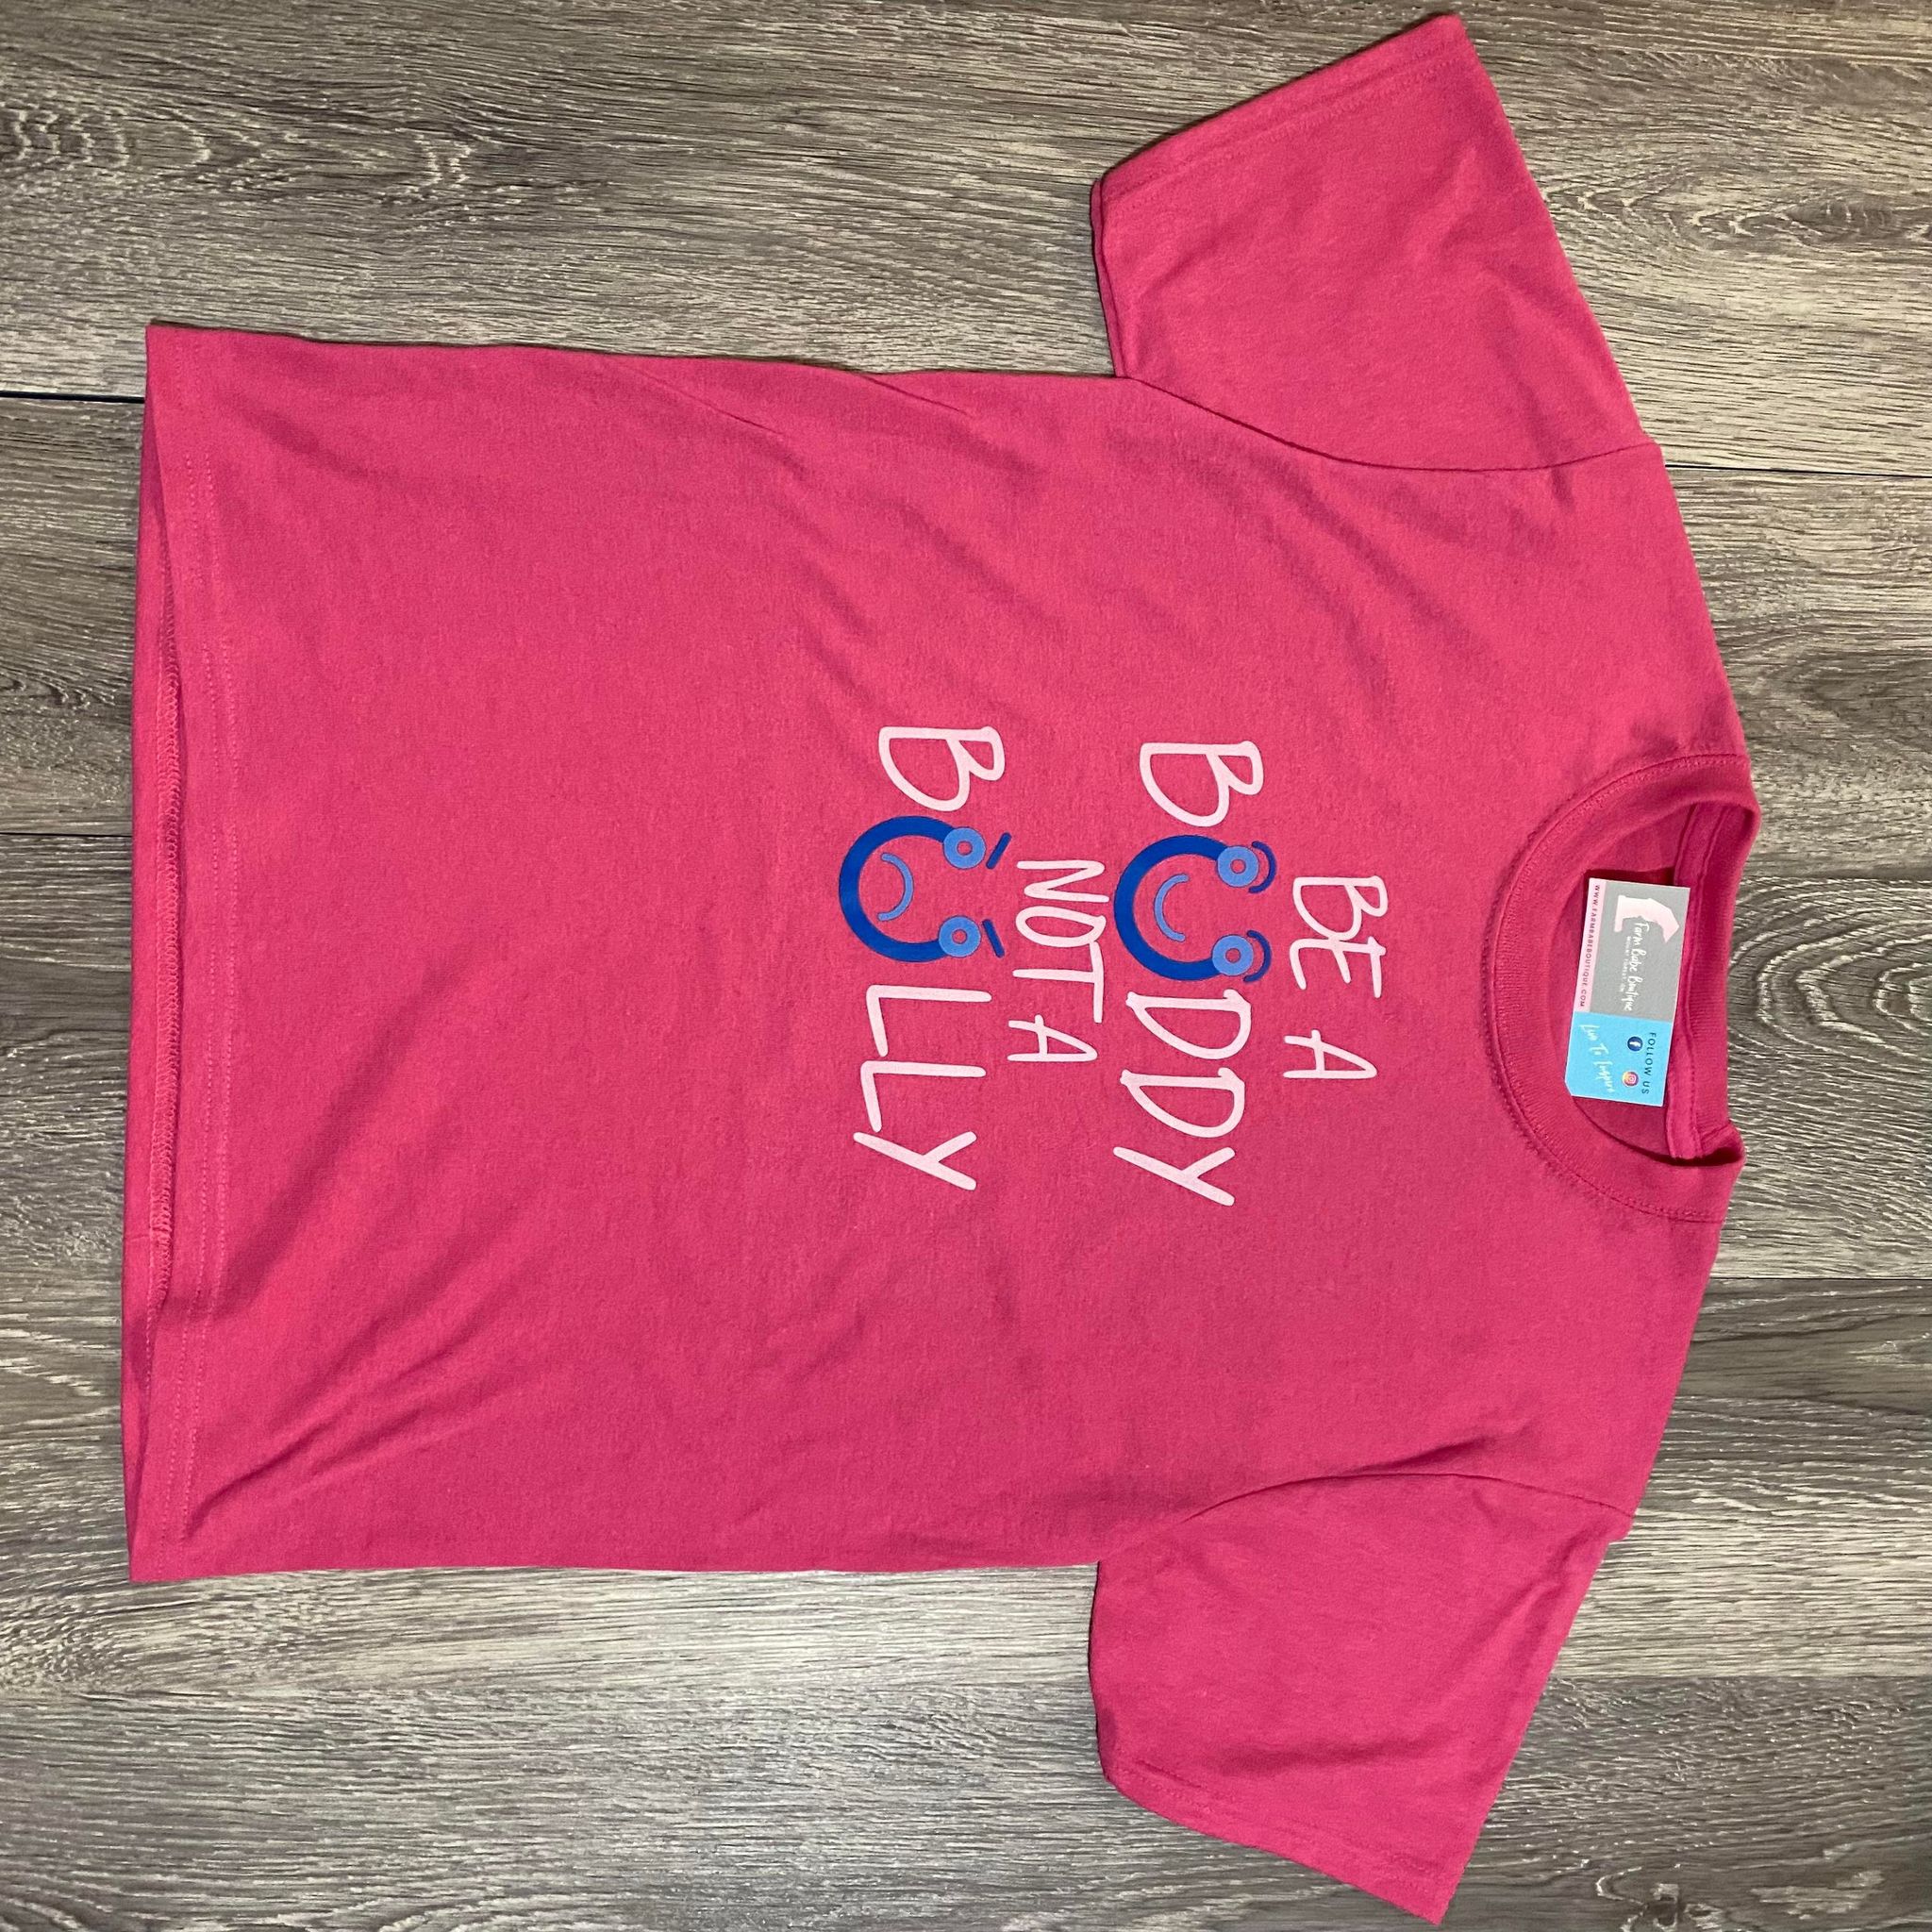 Be A Buddy  |  Youth T-Shirt